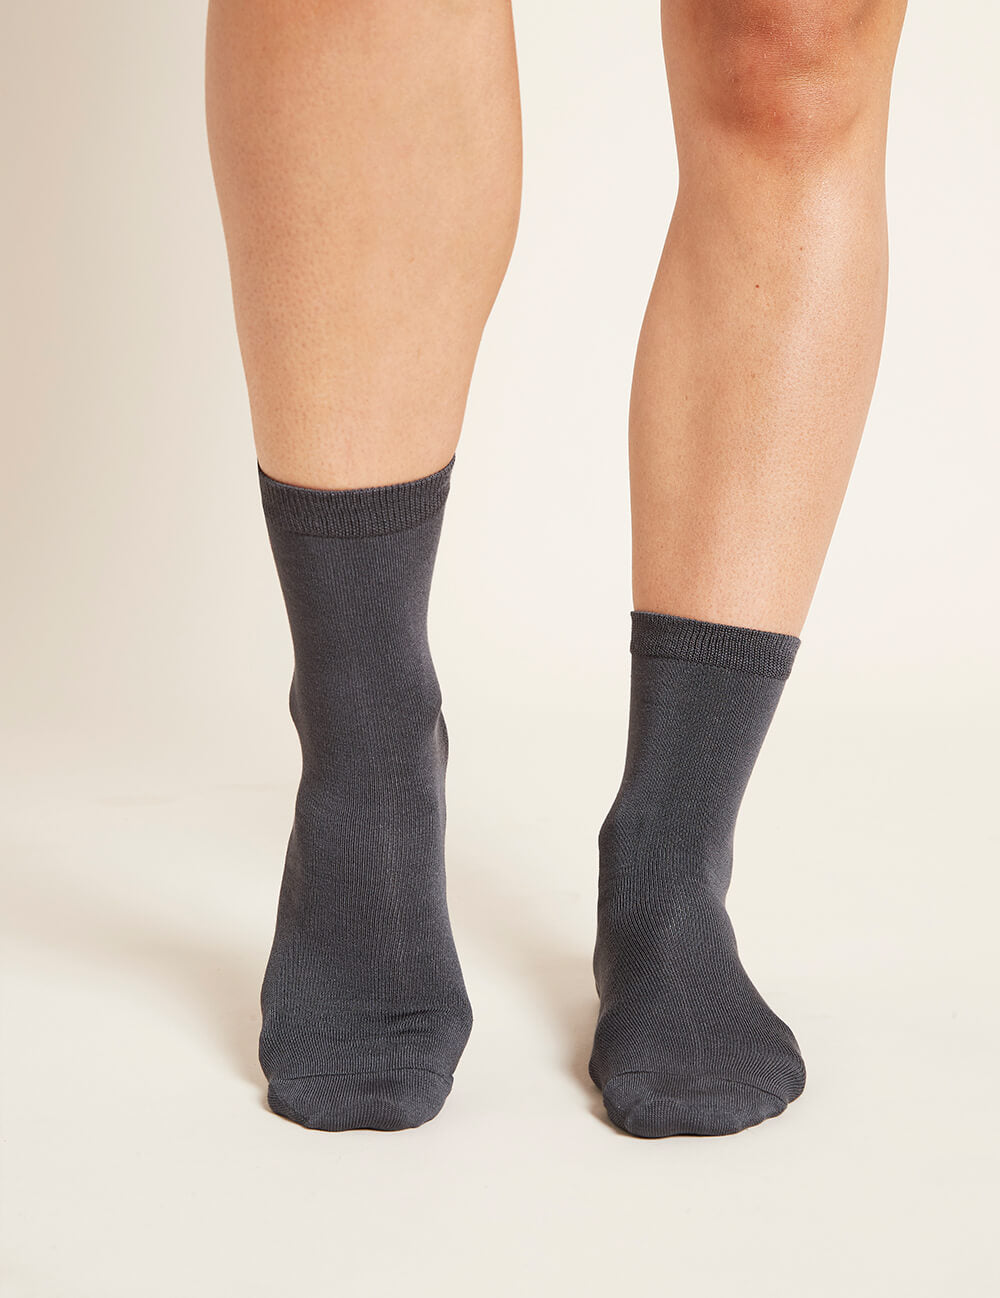 Boody Women's Everyday Socks in Slate Grey Front